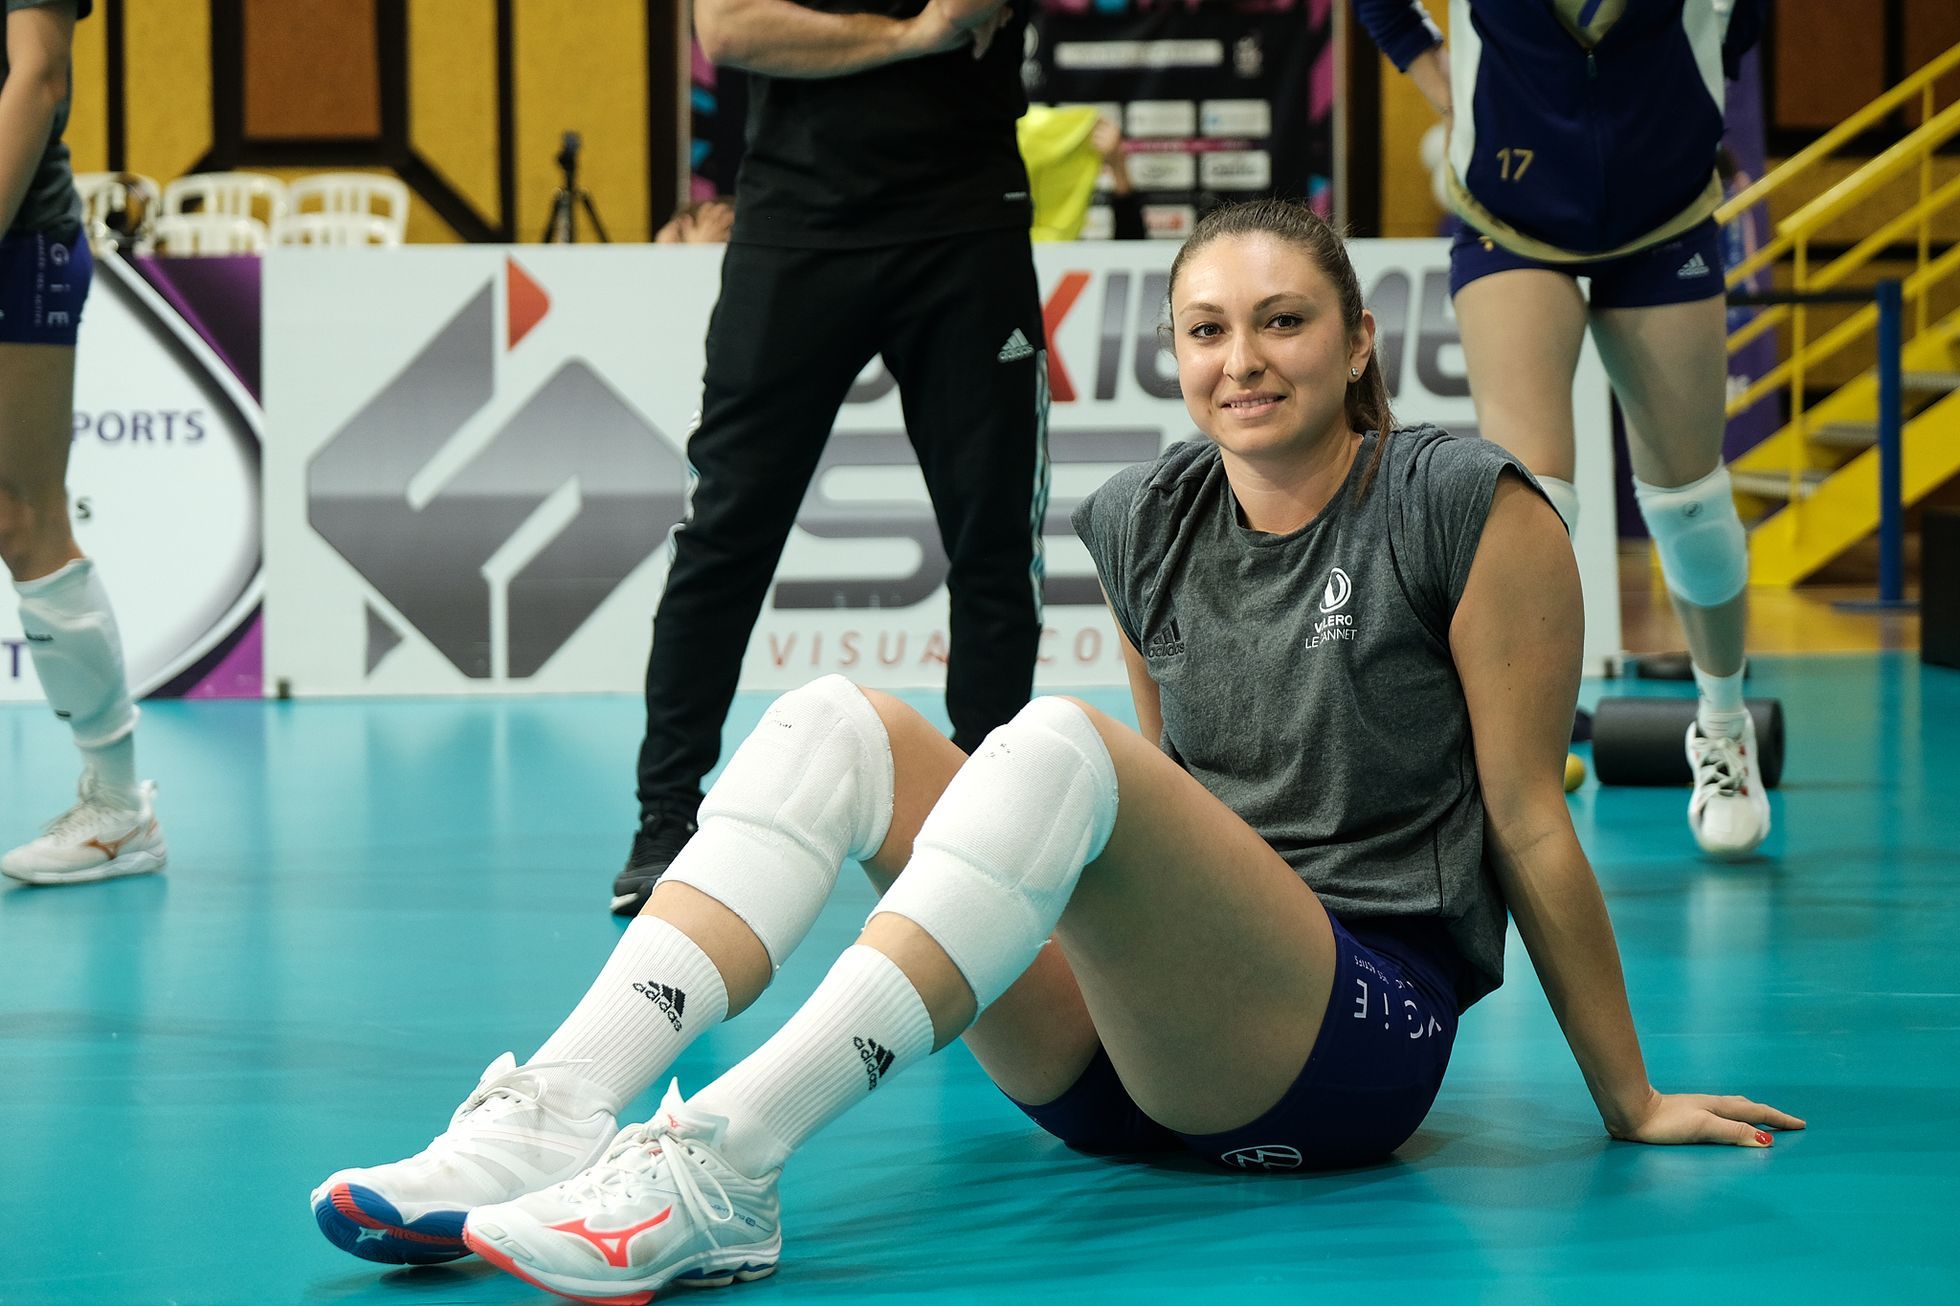 Dopo la vittoria in Francia, Mlejnková è andato in Turchia, sognando l’Italia e le Olimpiadi